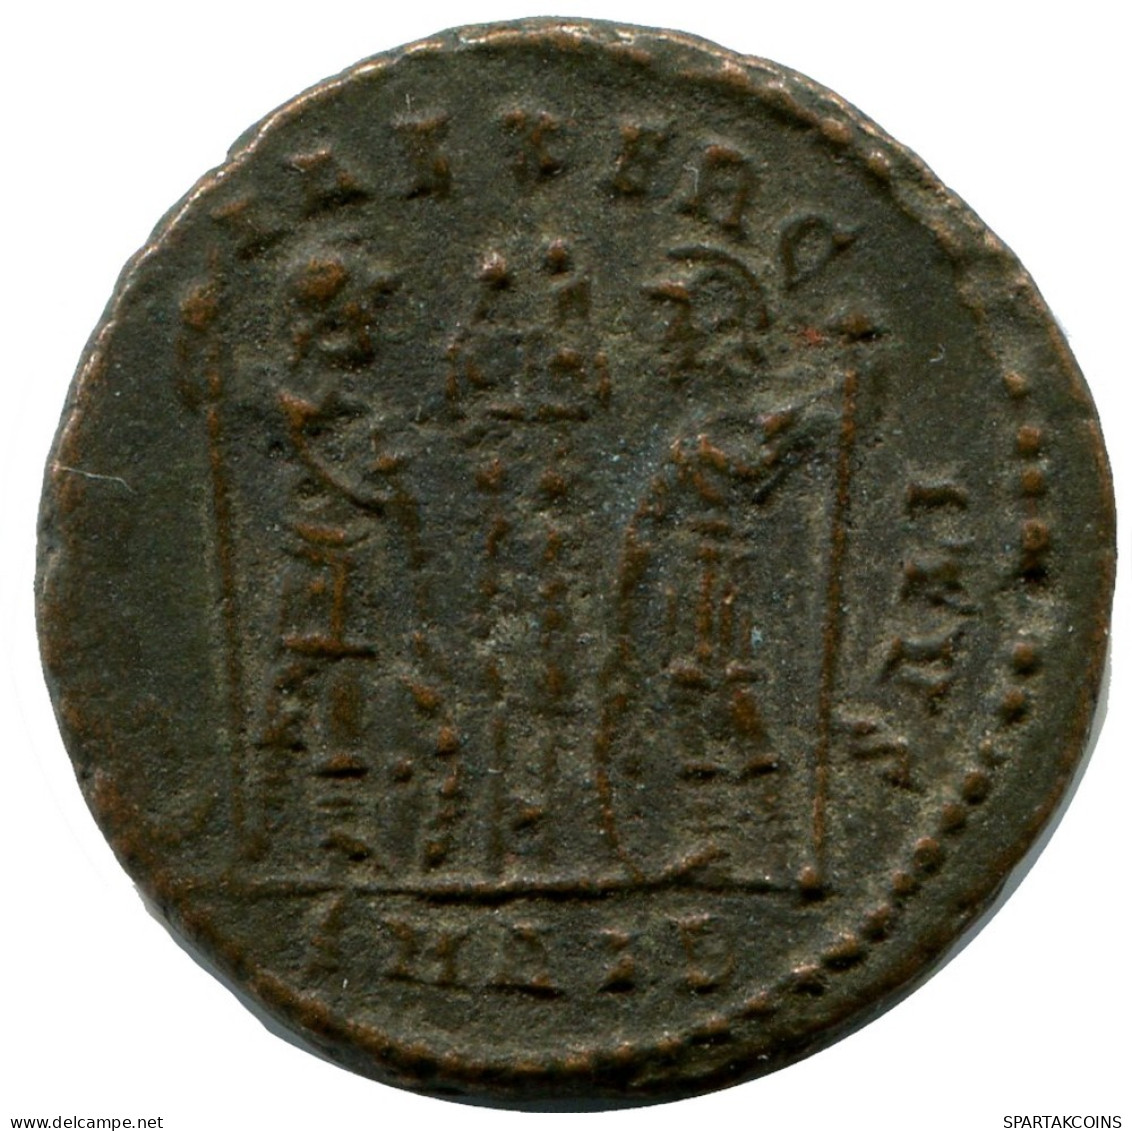 CONSTANTIUS II ALEKSANDRIA FROM THE ROYAL ONTARIO MUSEUM #ANC10470.14.E.A - The Christian Empire (307 AD Tot 363 AD)